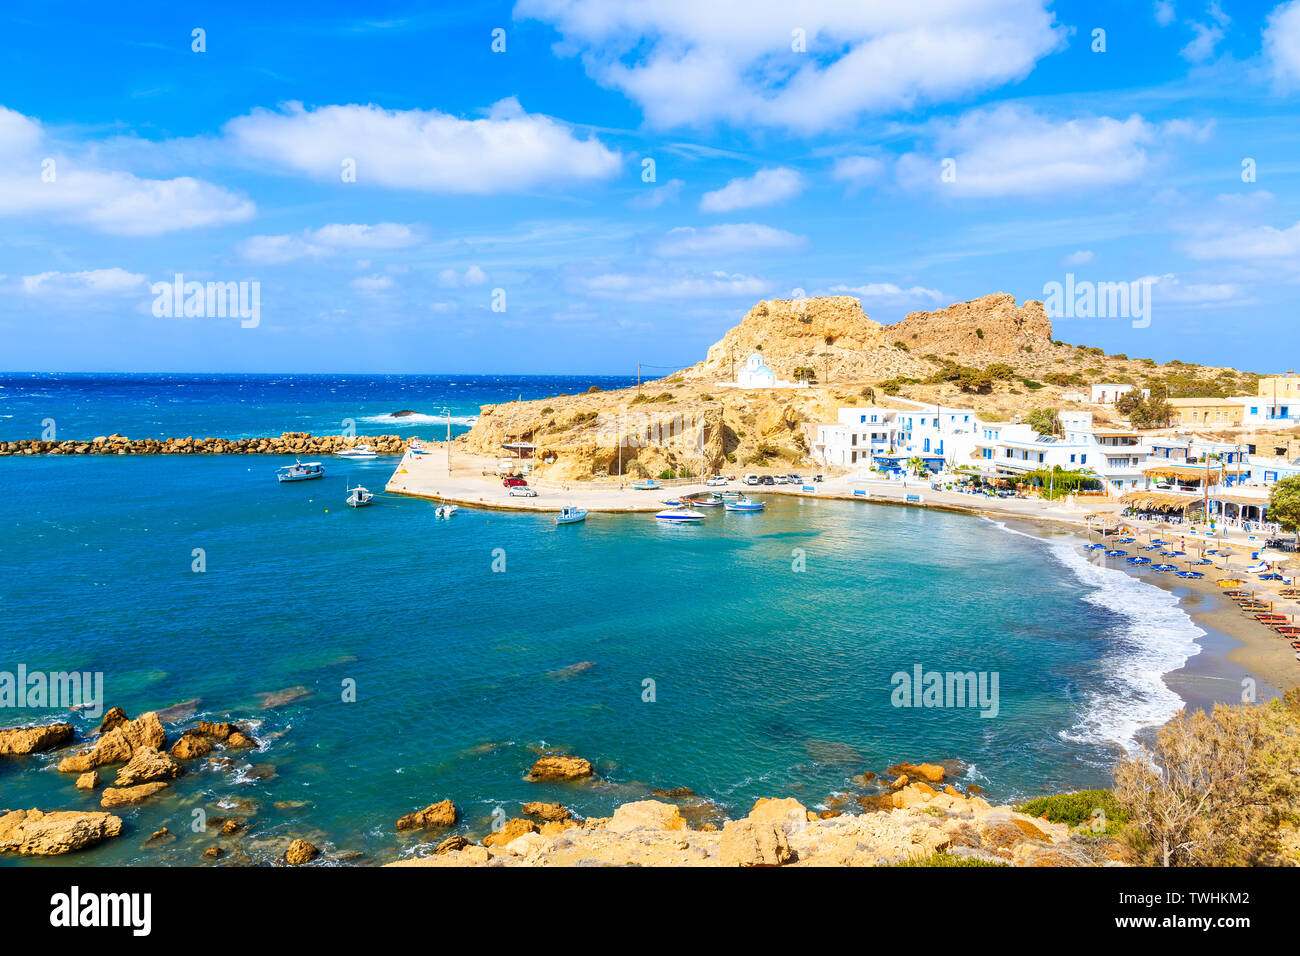 View of Finiki port and beach on sea coast of Karpathos island, Greece Stock Photo